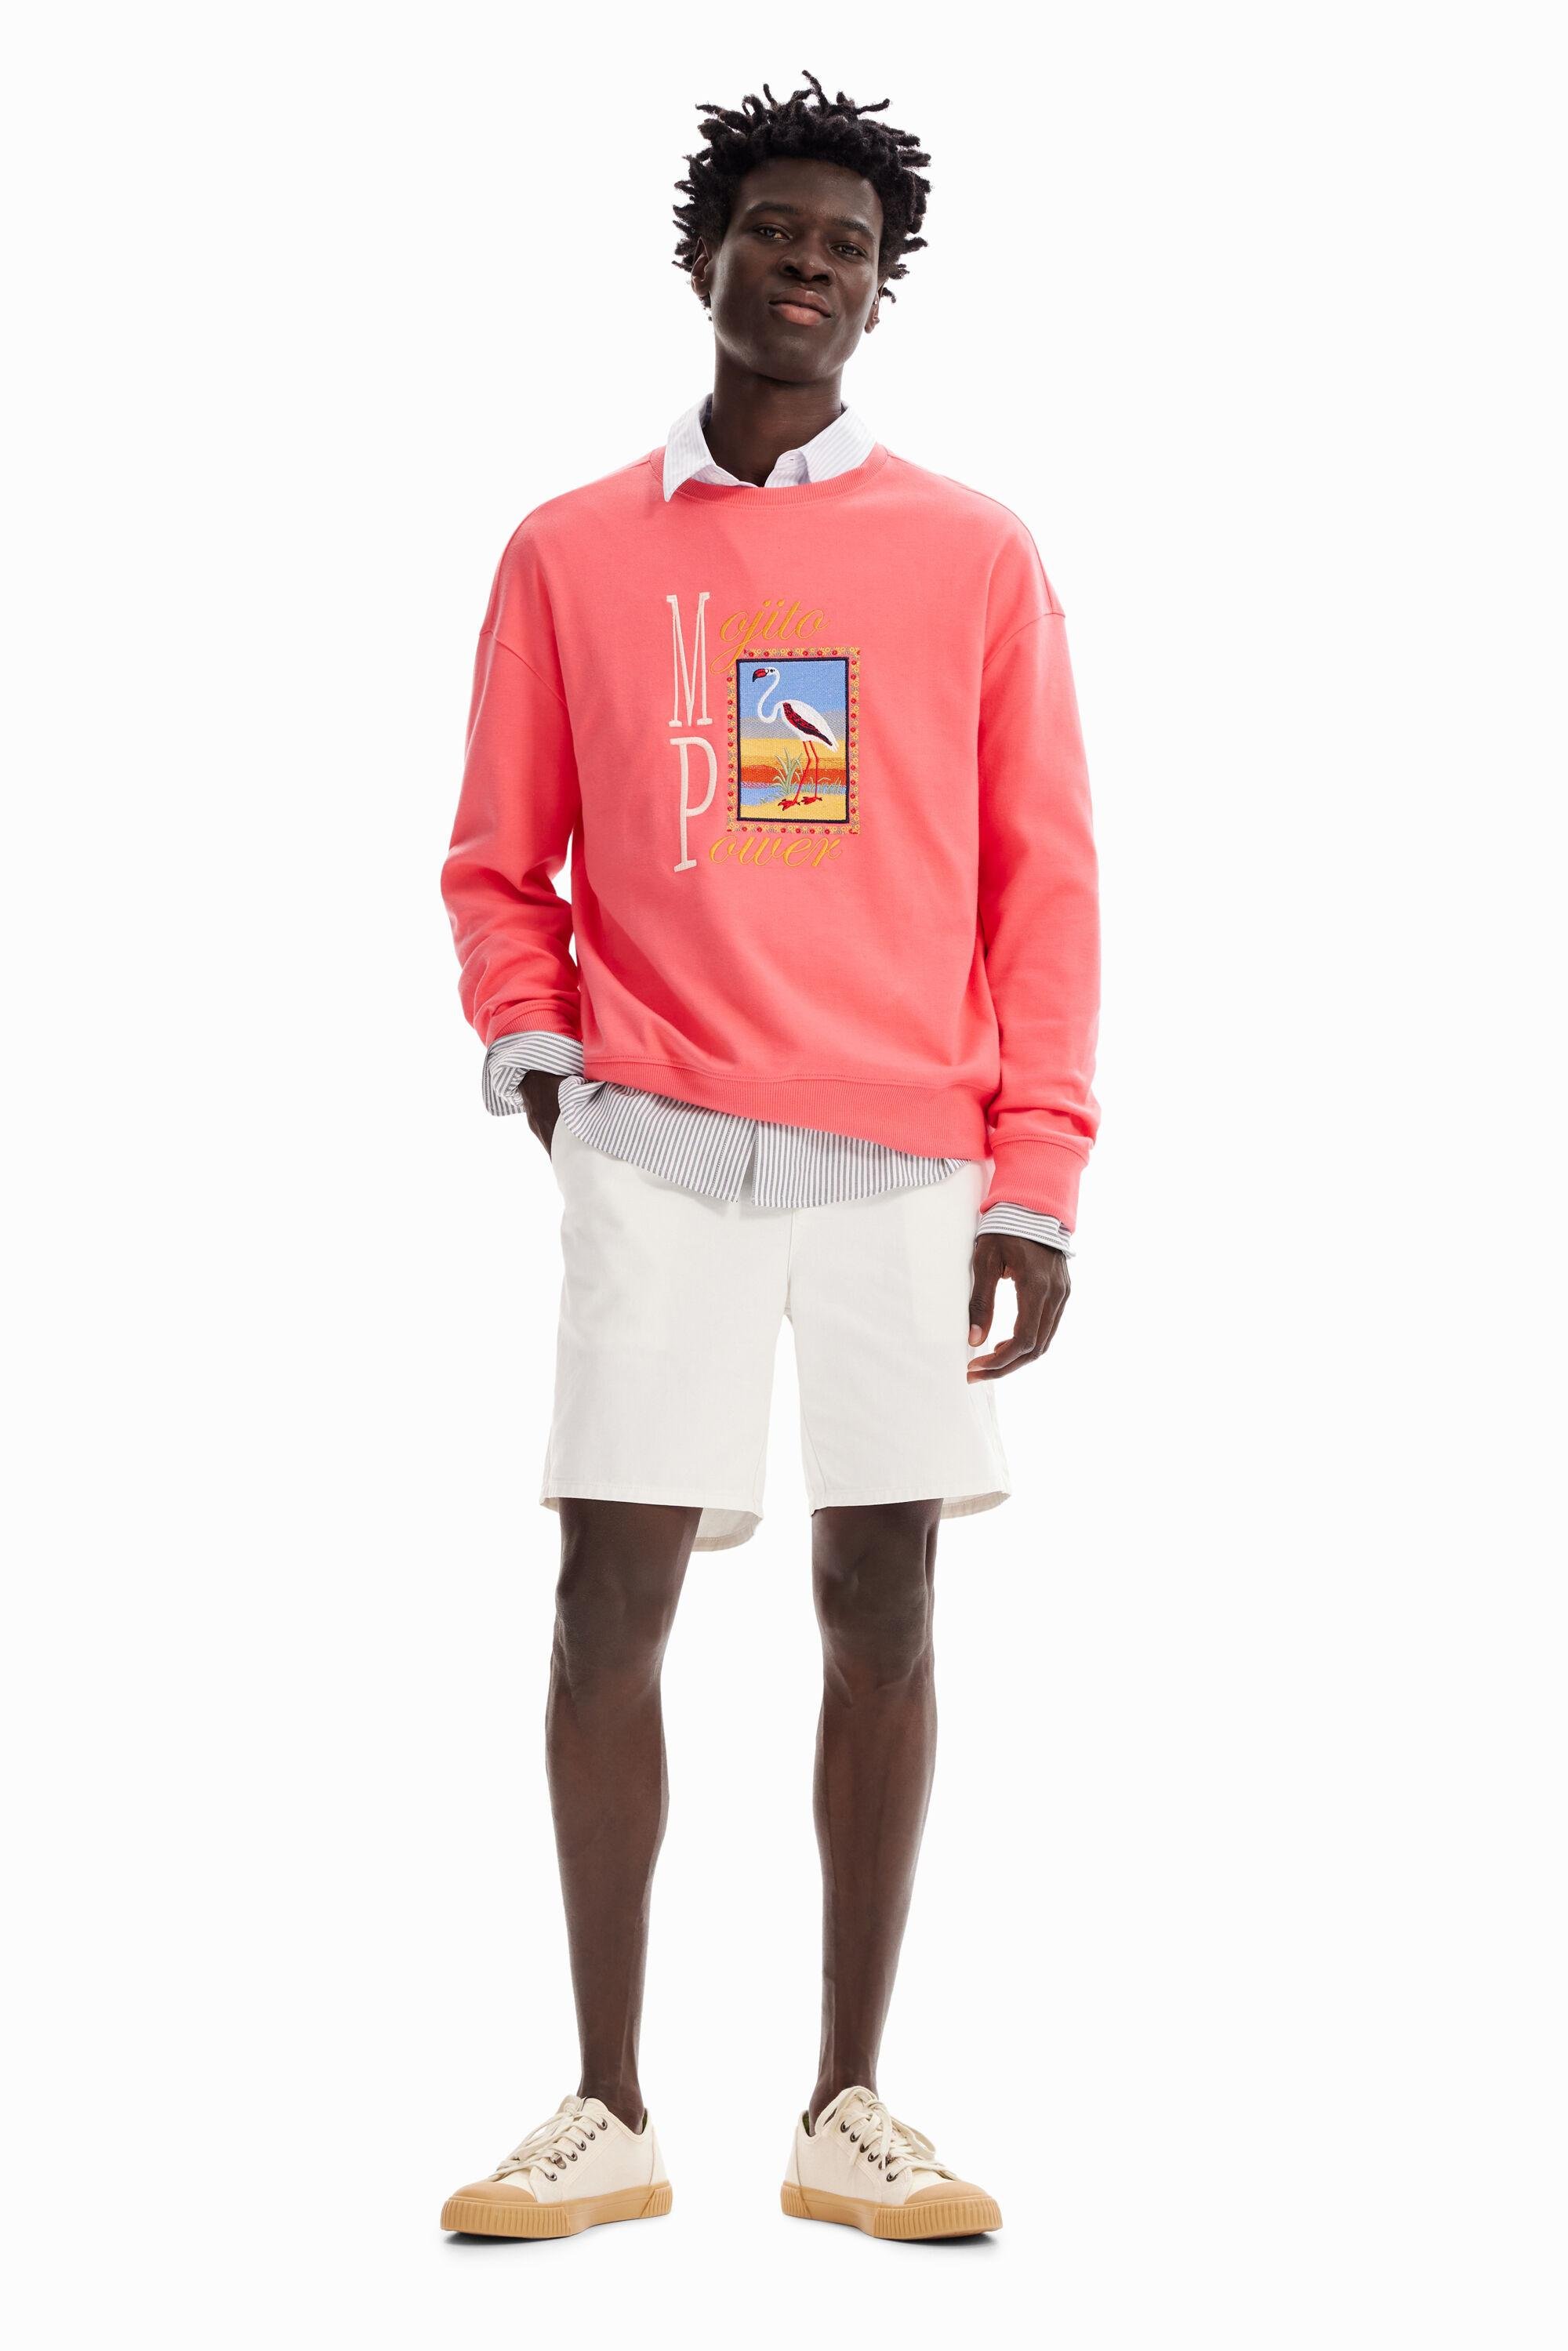 Flamingo embroidery sweatshirt by DESIGUAL